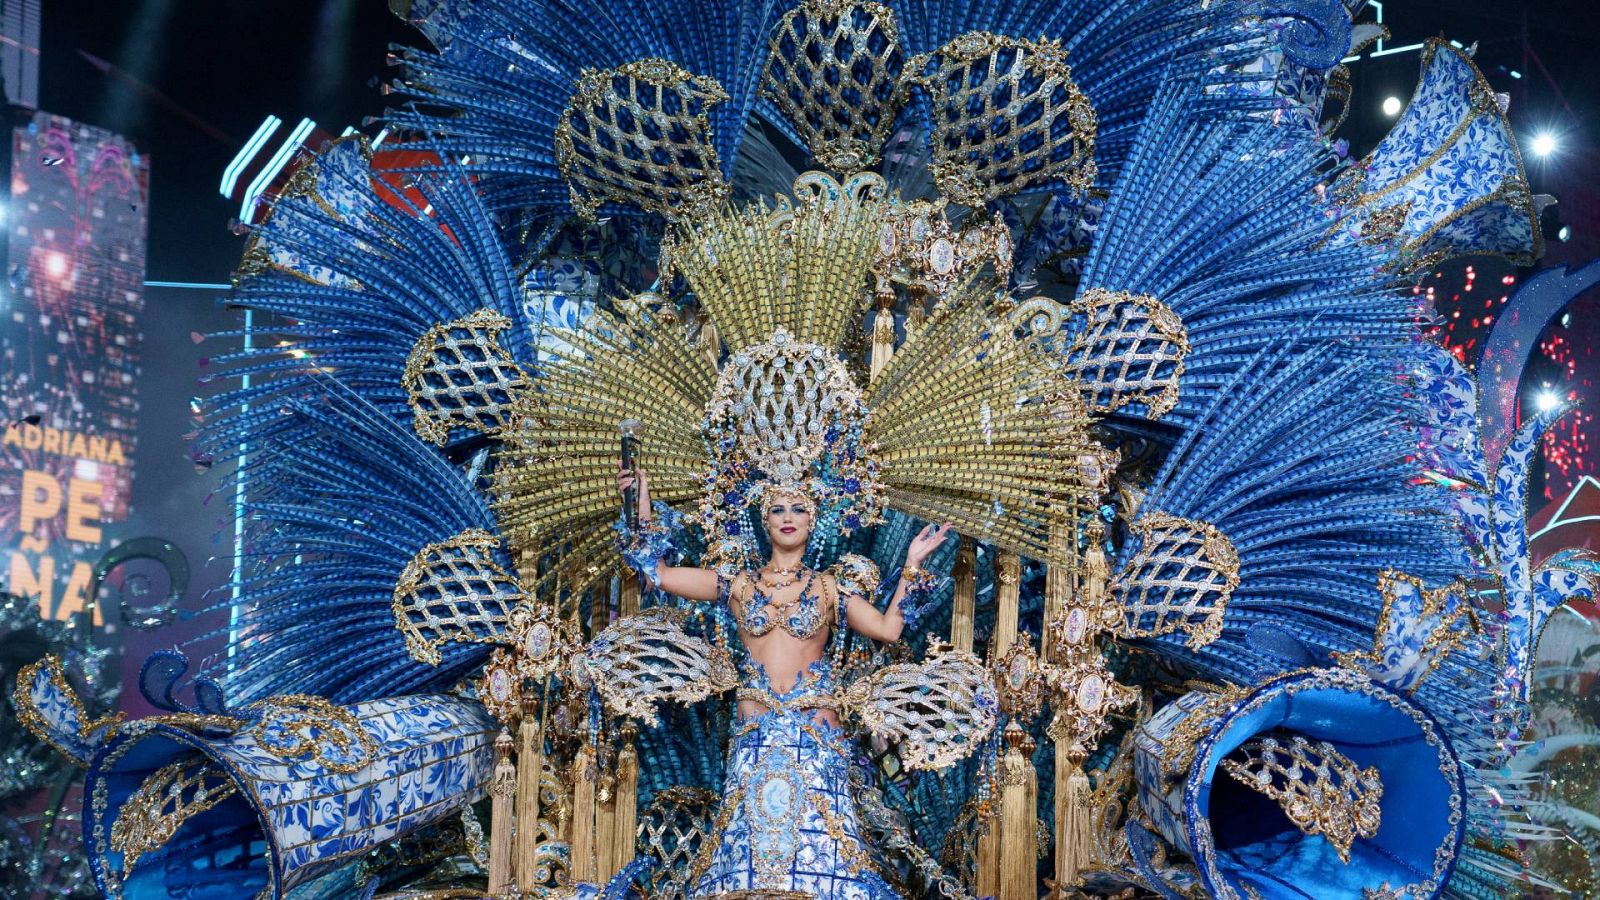 Adriana Peña, la esta Reina del Carnaval de Santa Cruz de Tenerife 2023